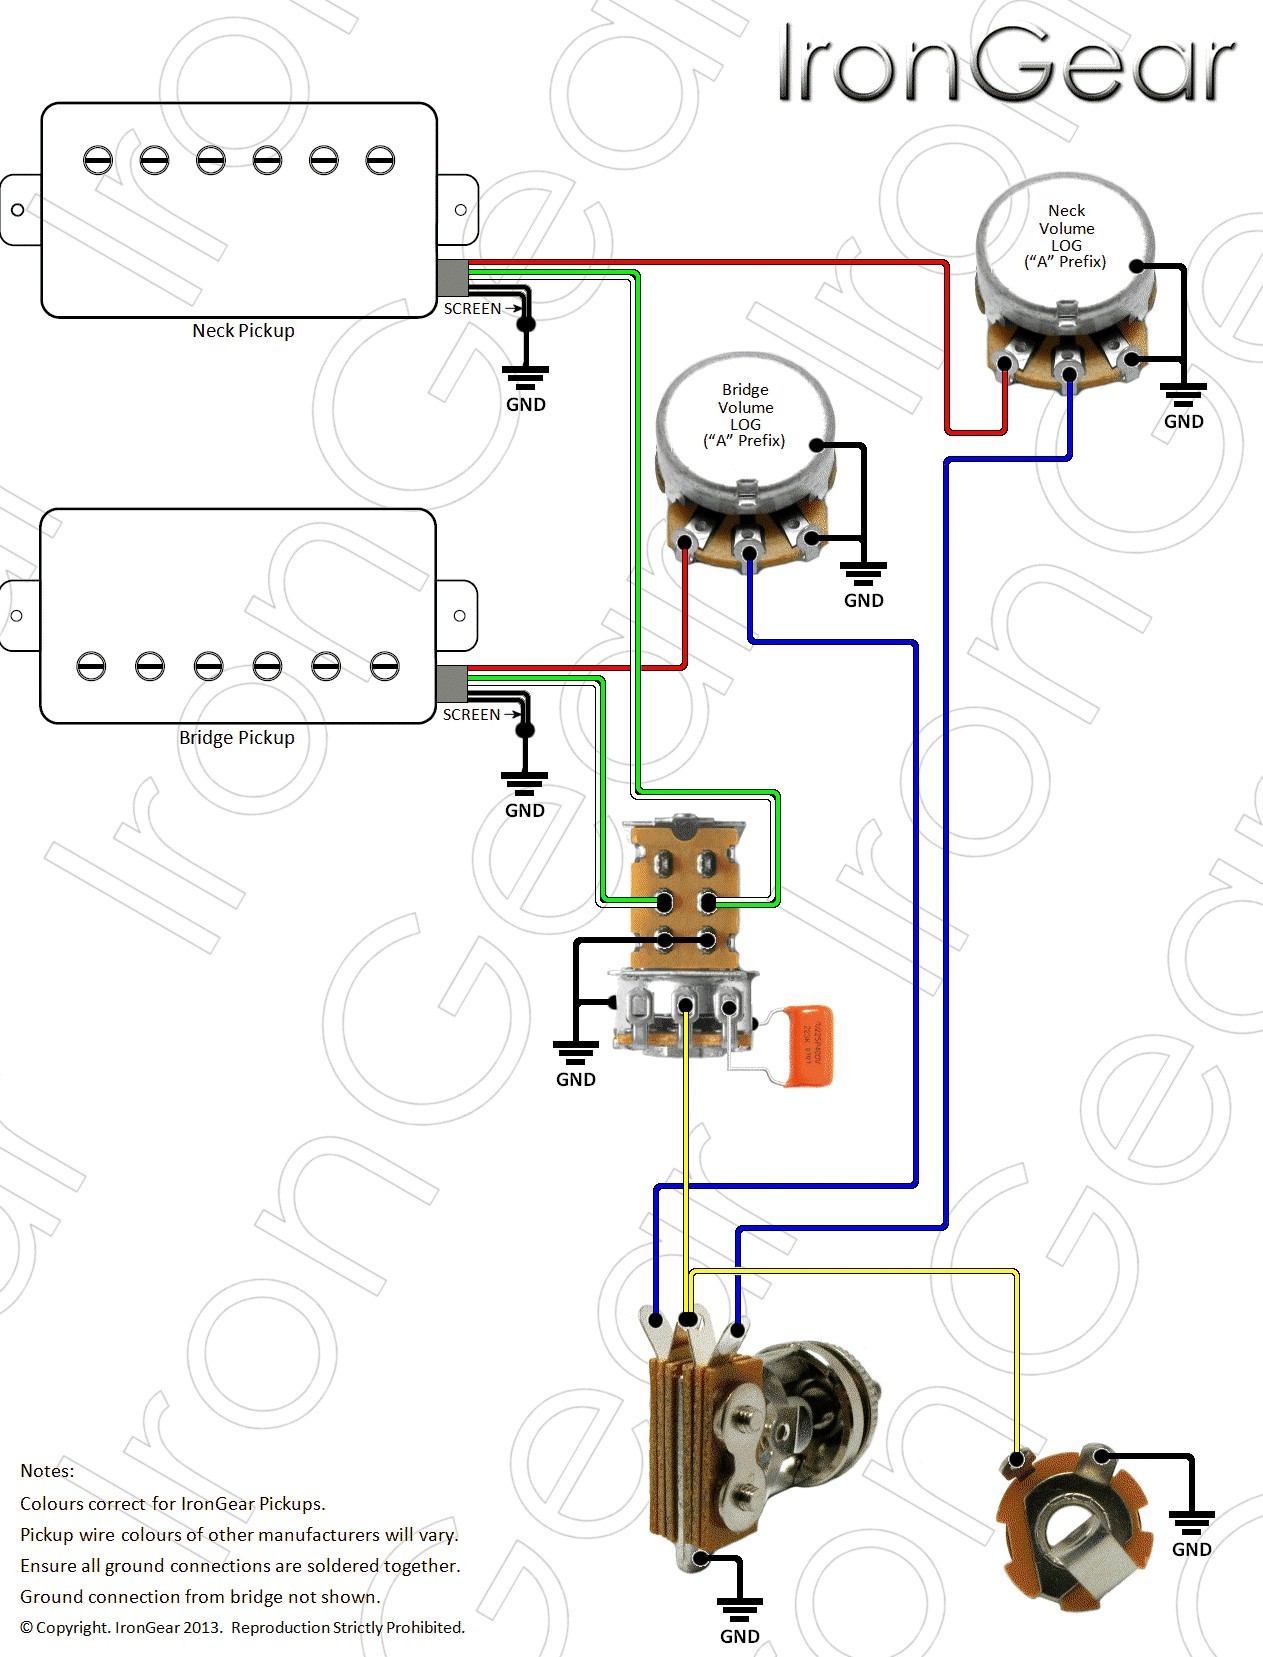 Active Guitar Wiring Diagram New Emg Wiring Diagram Copy Emg Wiring Diagram 81 85 2 Volume 1 Tone